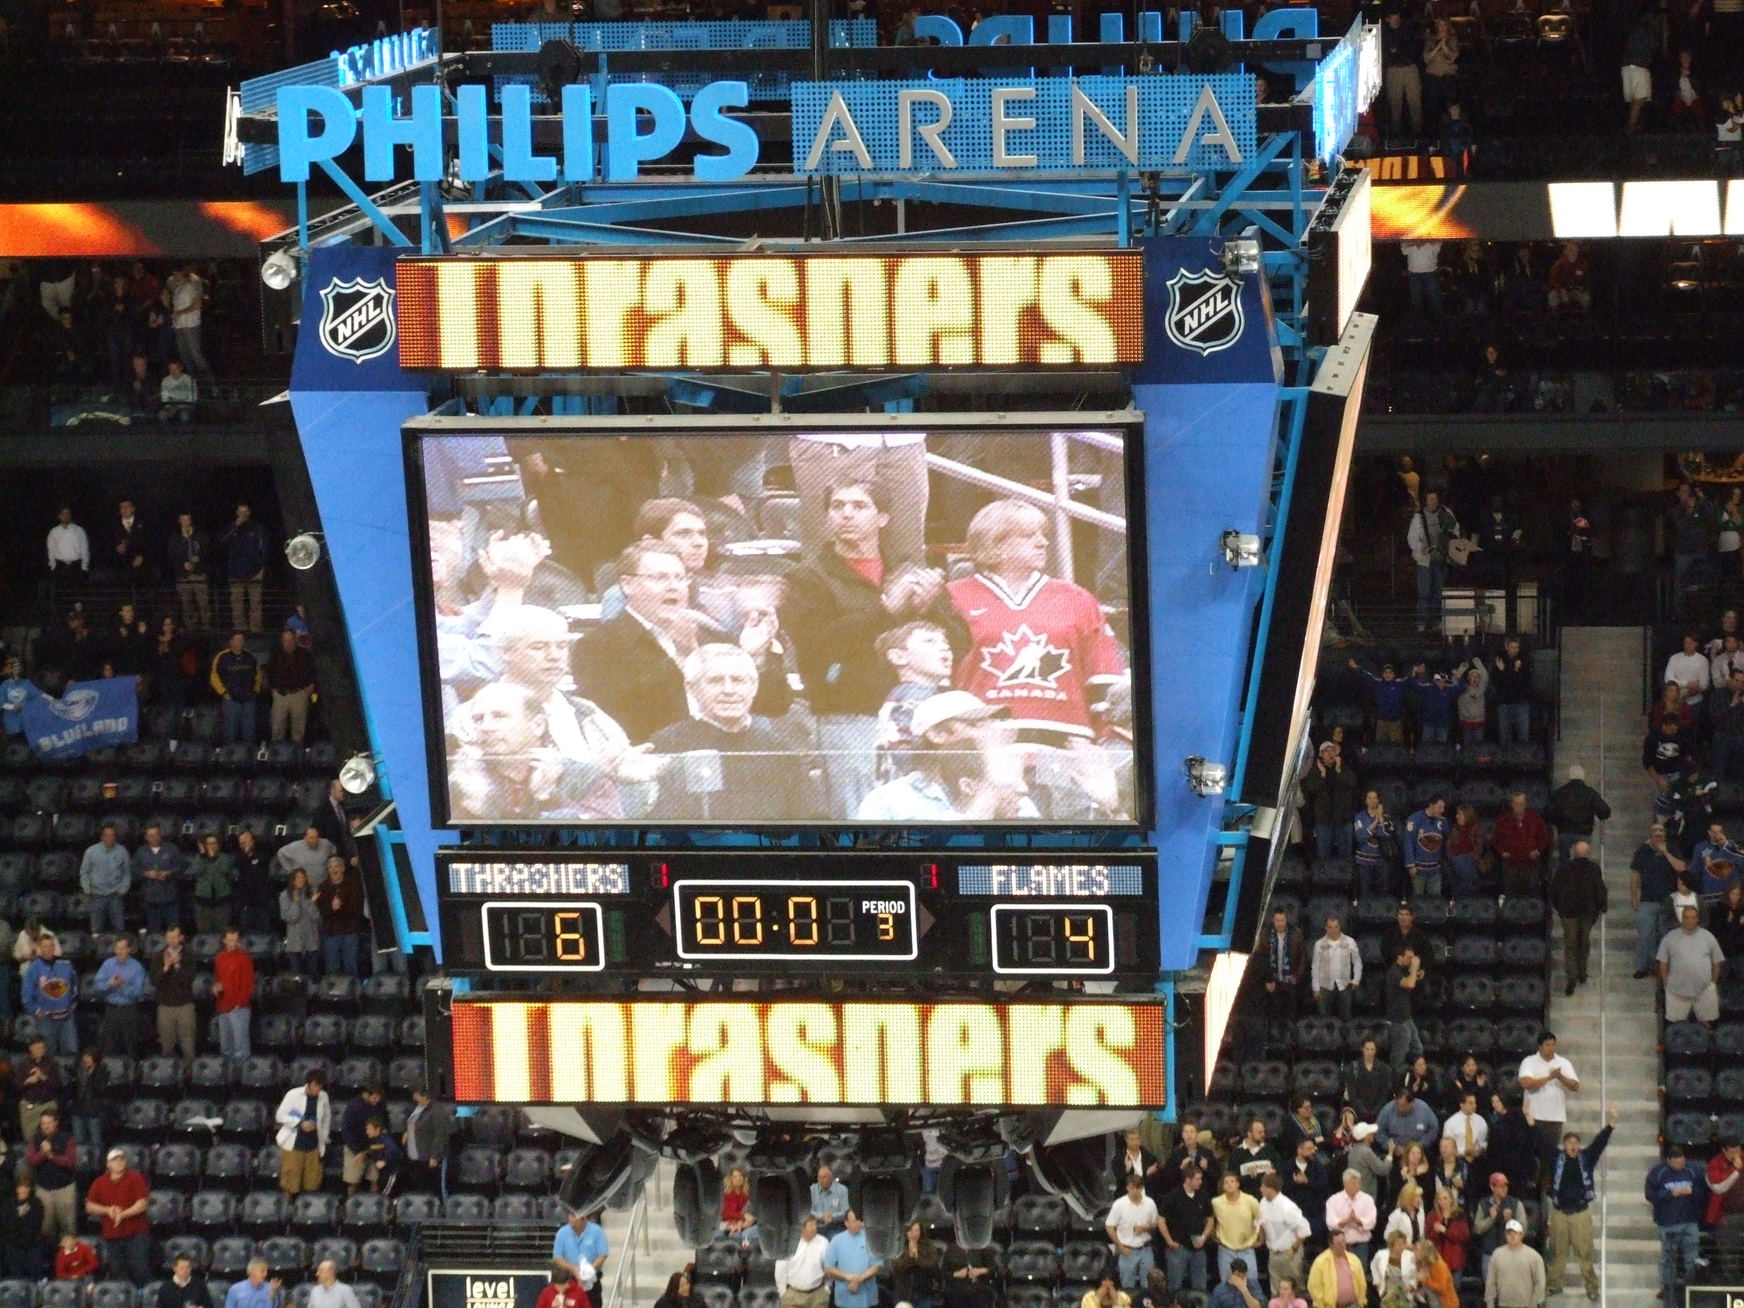 Calgary Flames vs. Atlanta Thrashers, Philips Arena, Atlanta, Georgia -  March 13, 2008